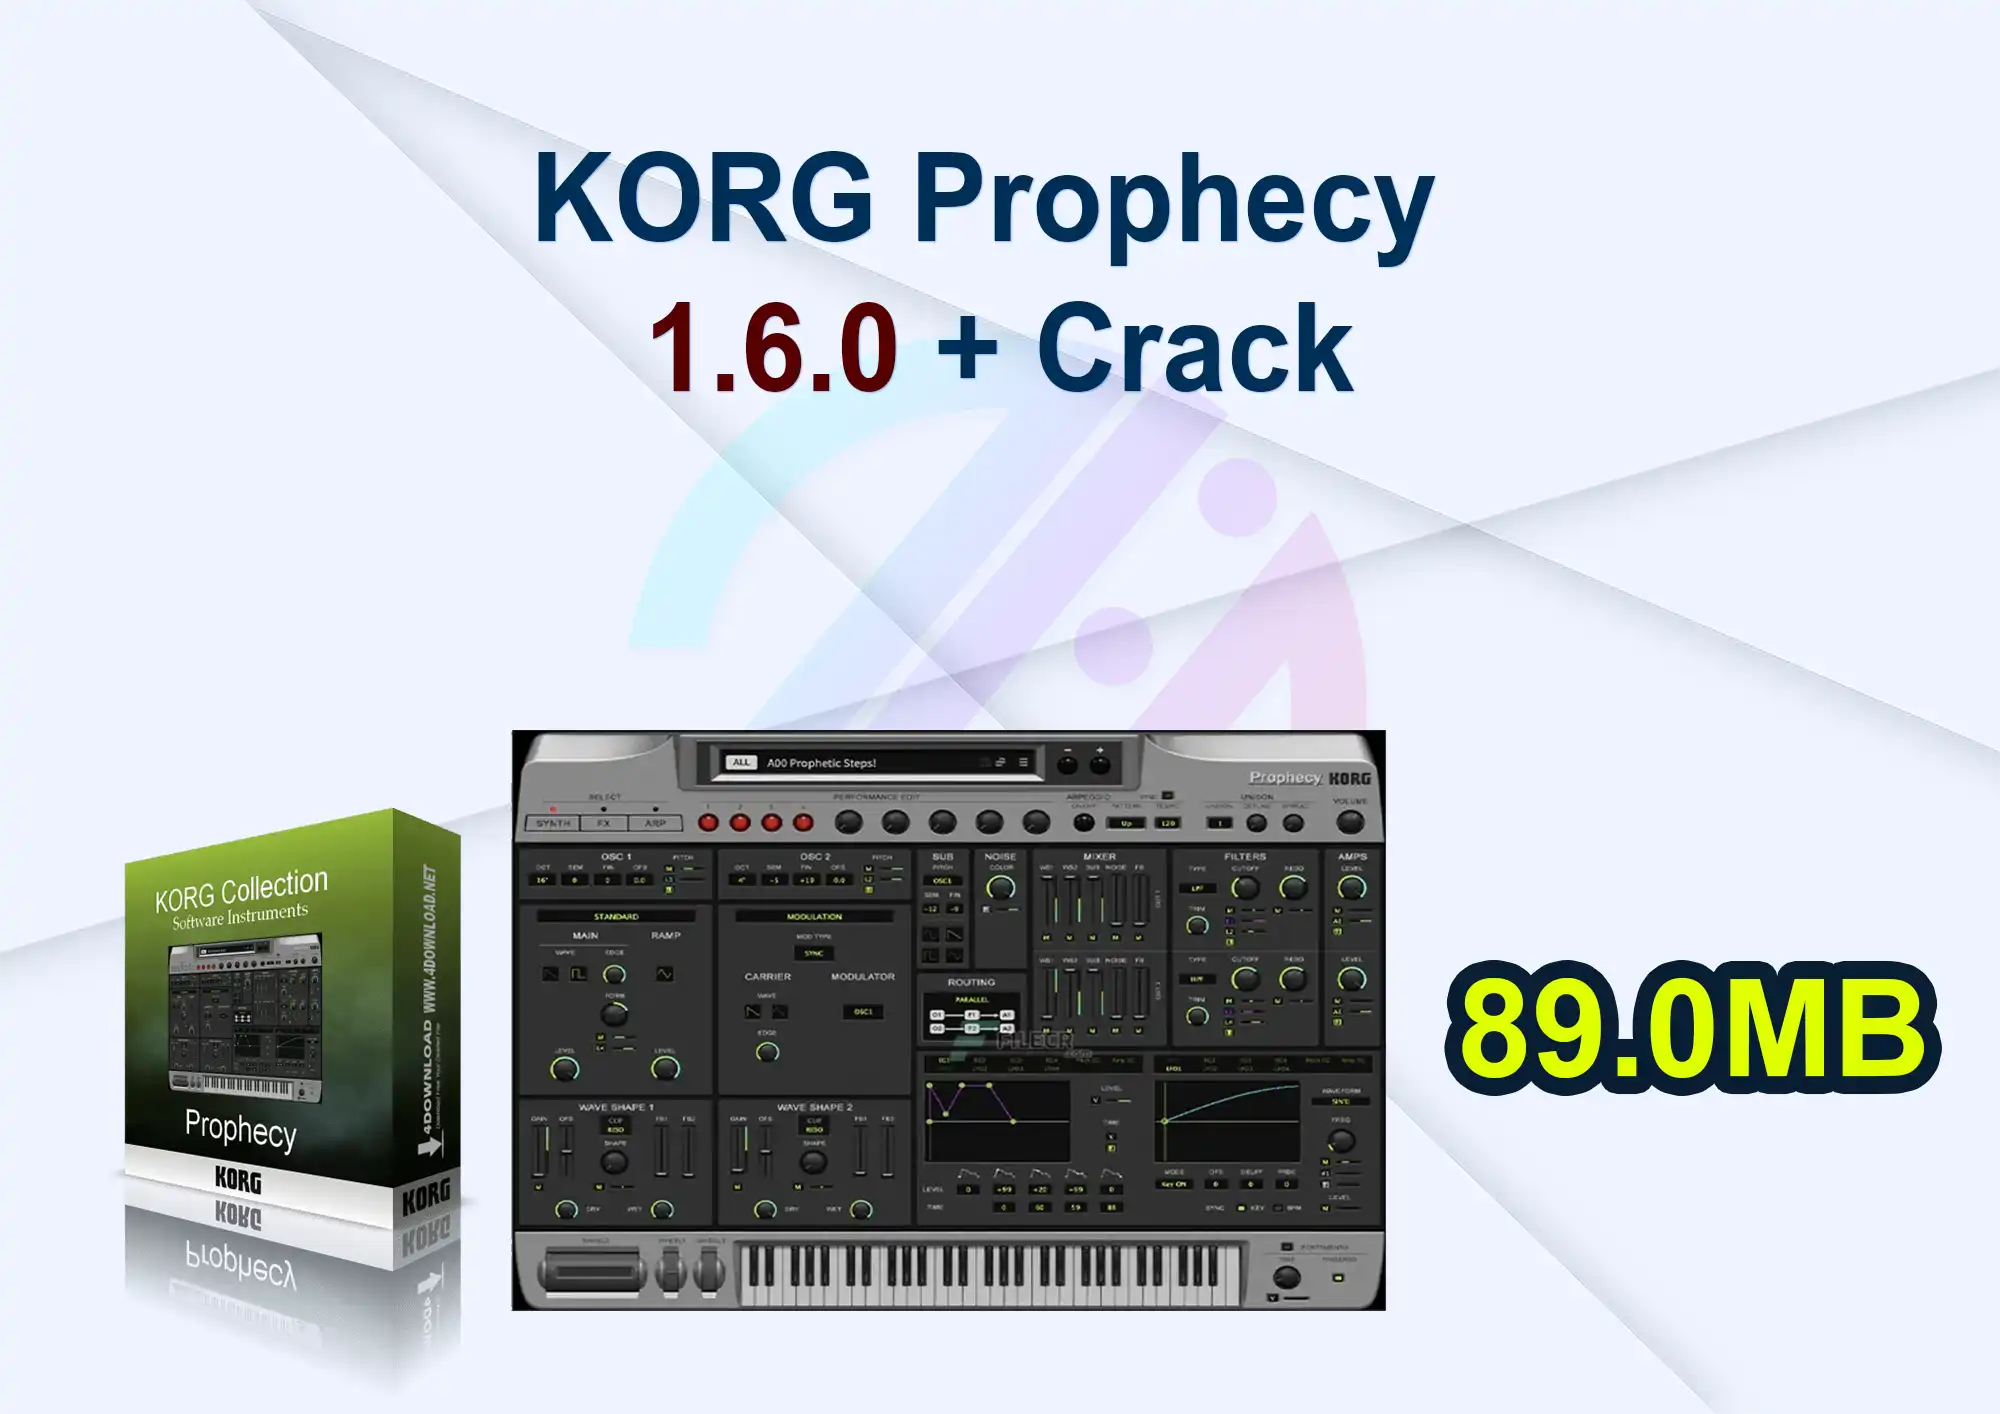 KORG Prophecy 1.6.0 + Crack